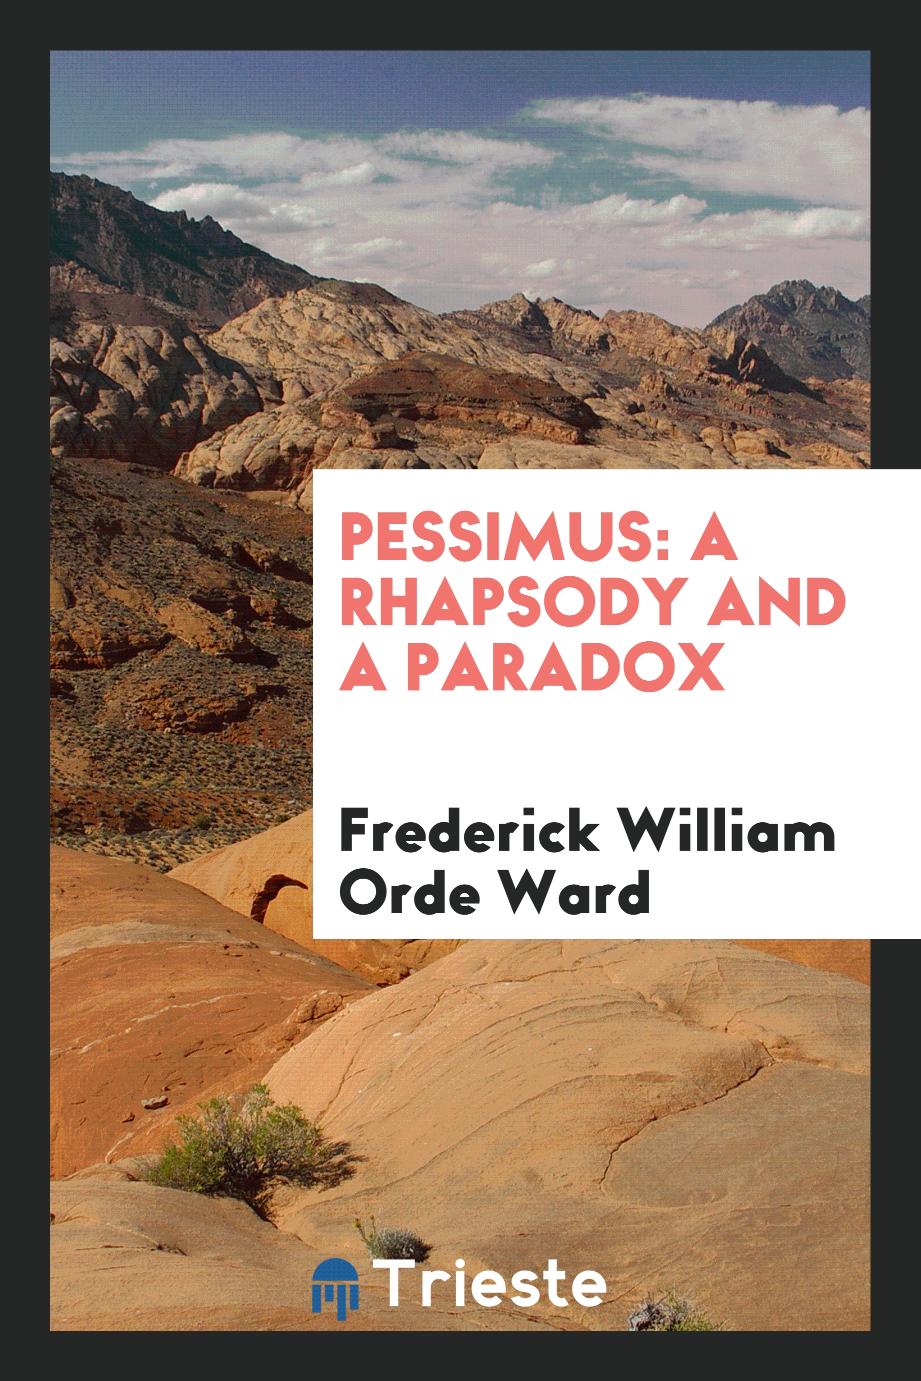 Pessimus: a rhapsody and a paradox